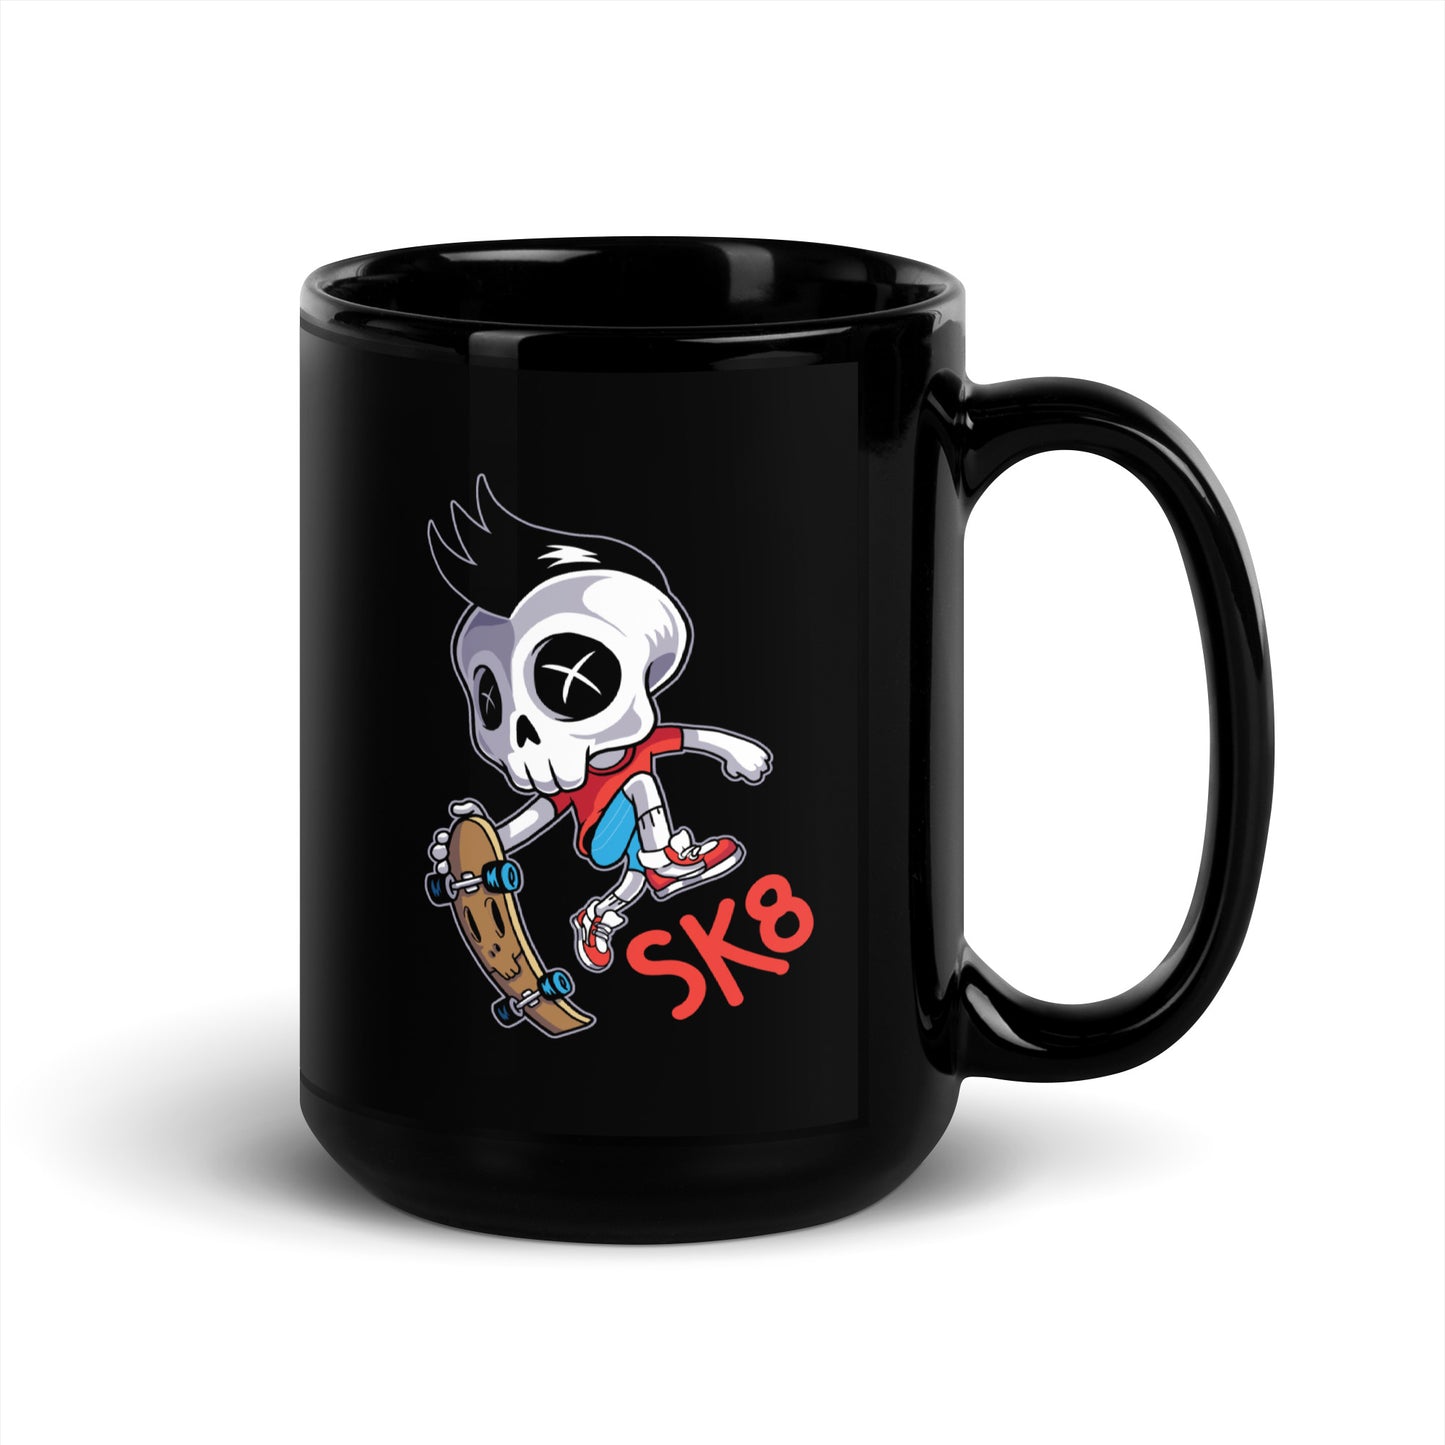 Sk8 Coffee Mug